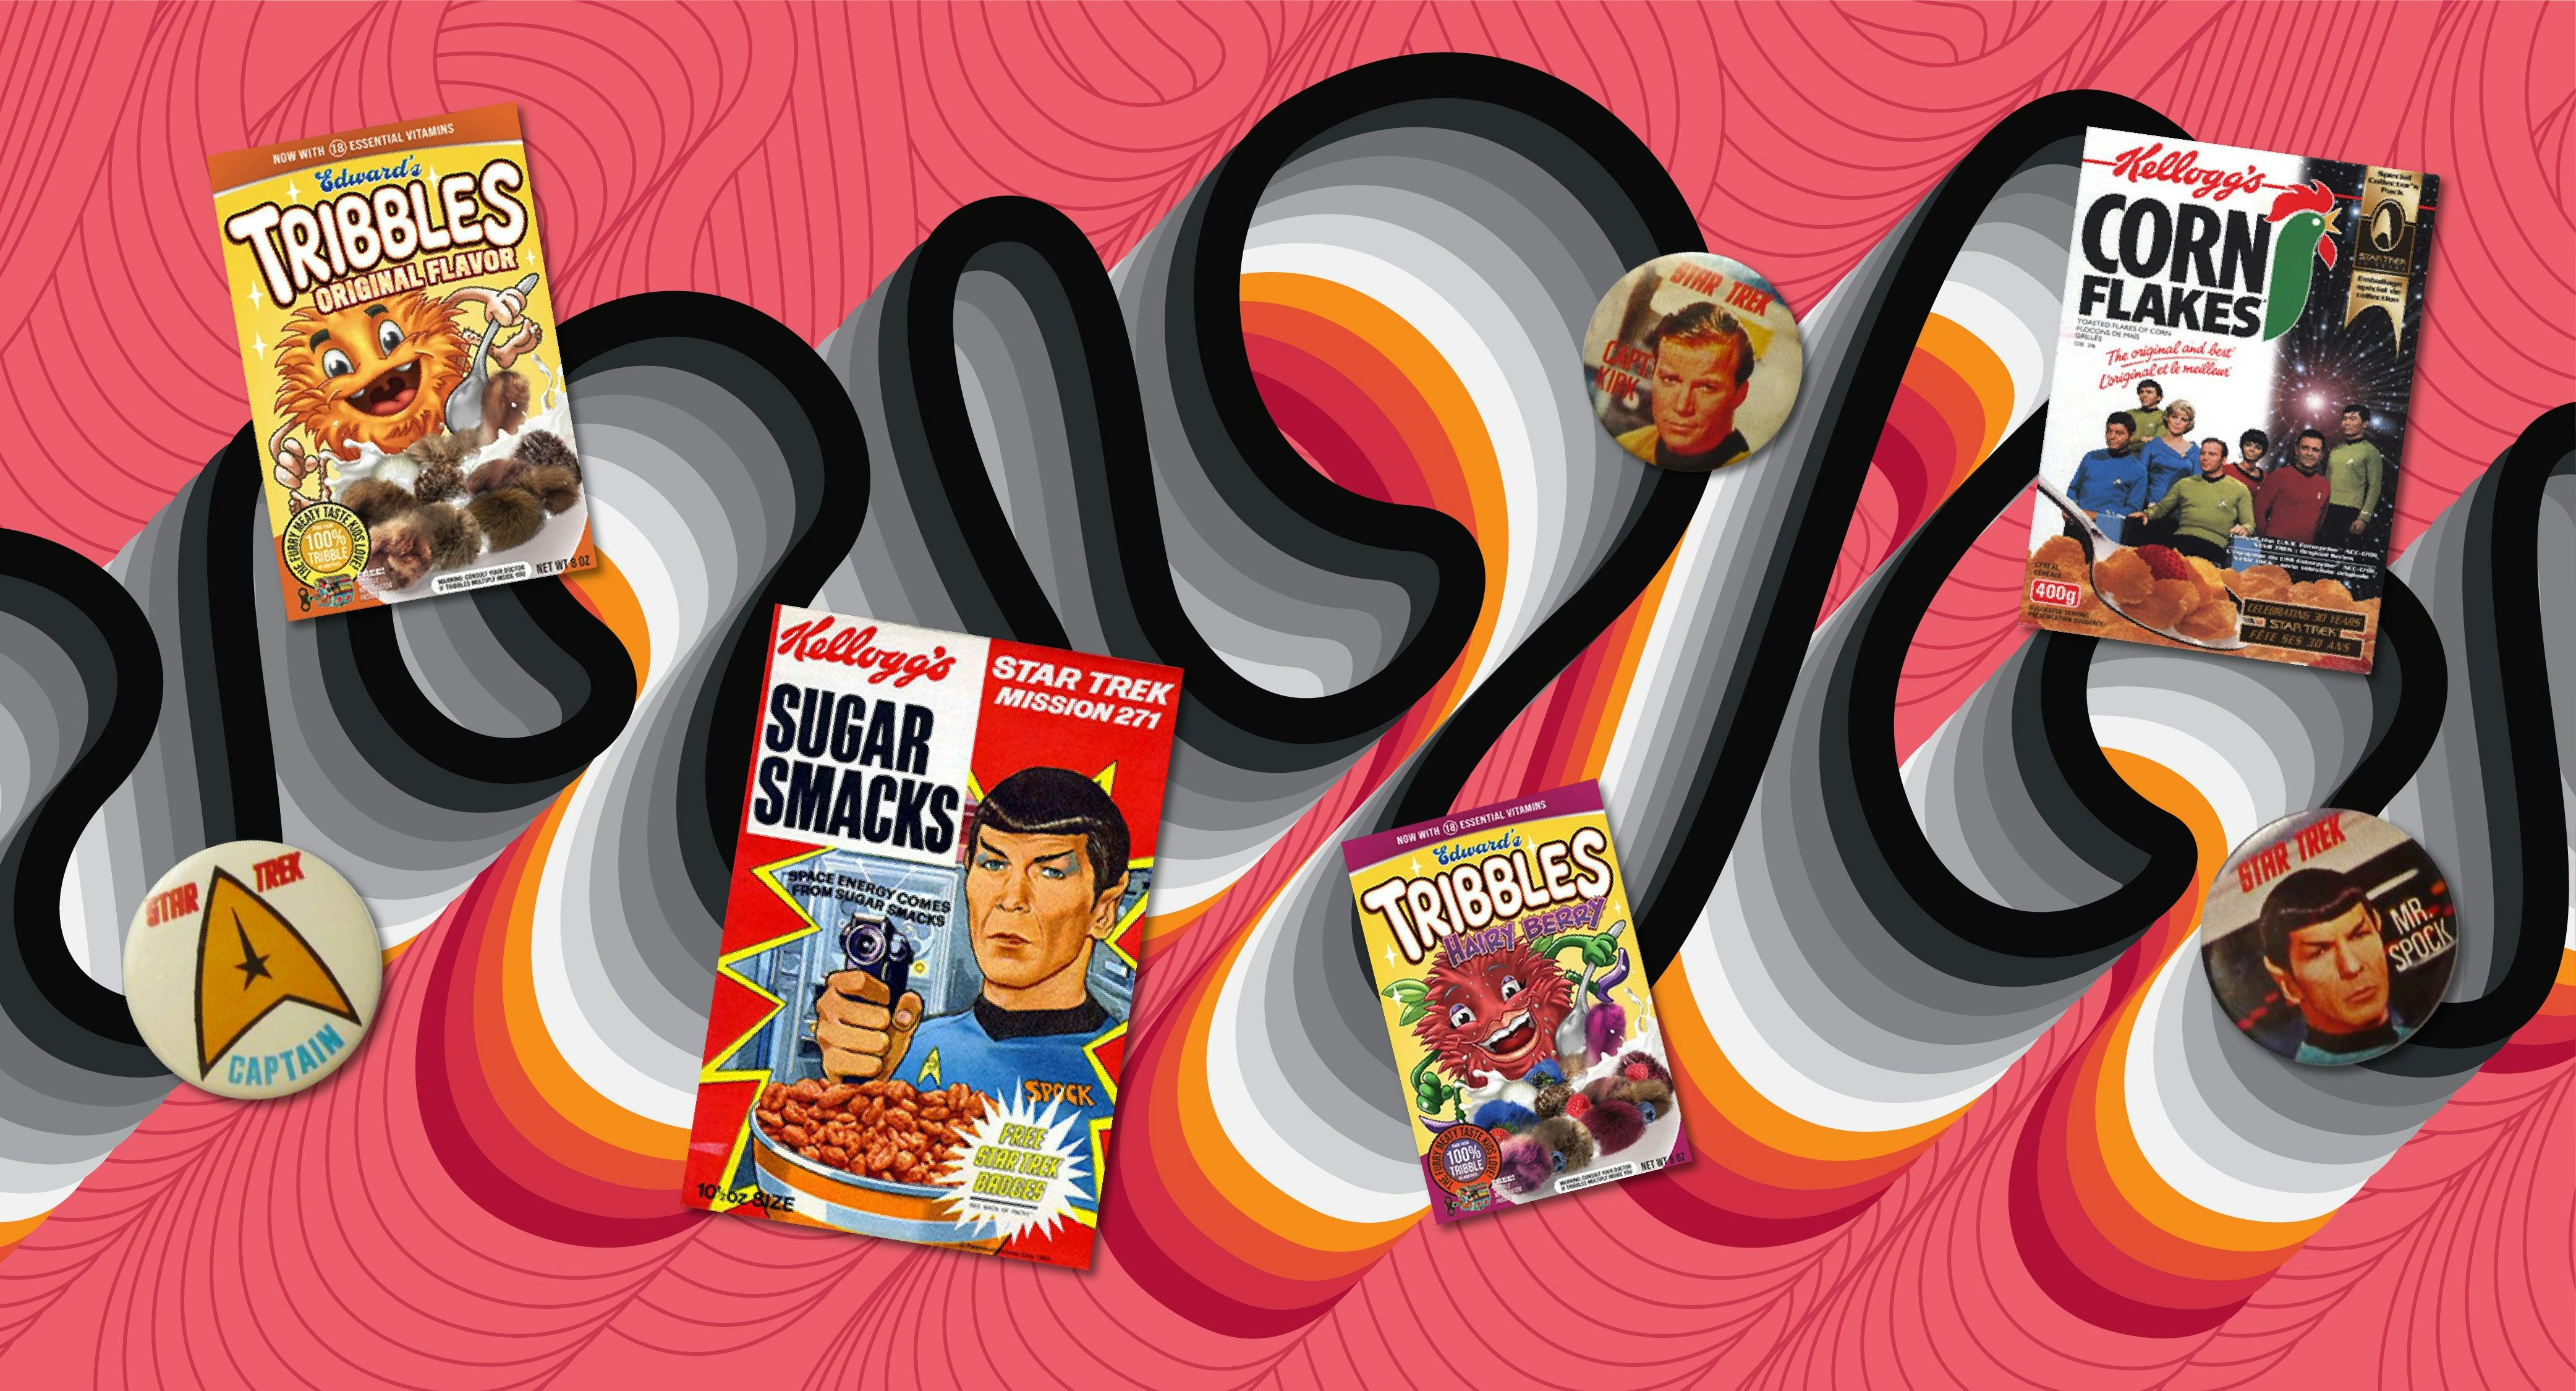 Star Trek Cereal